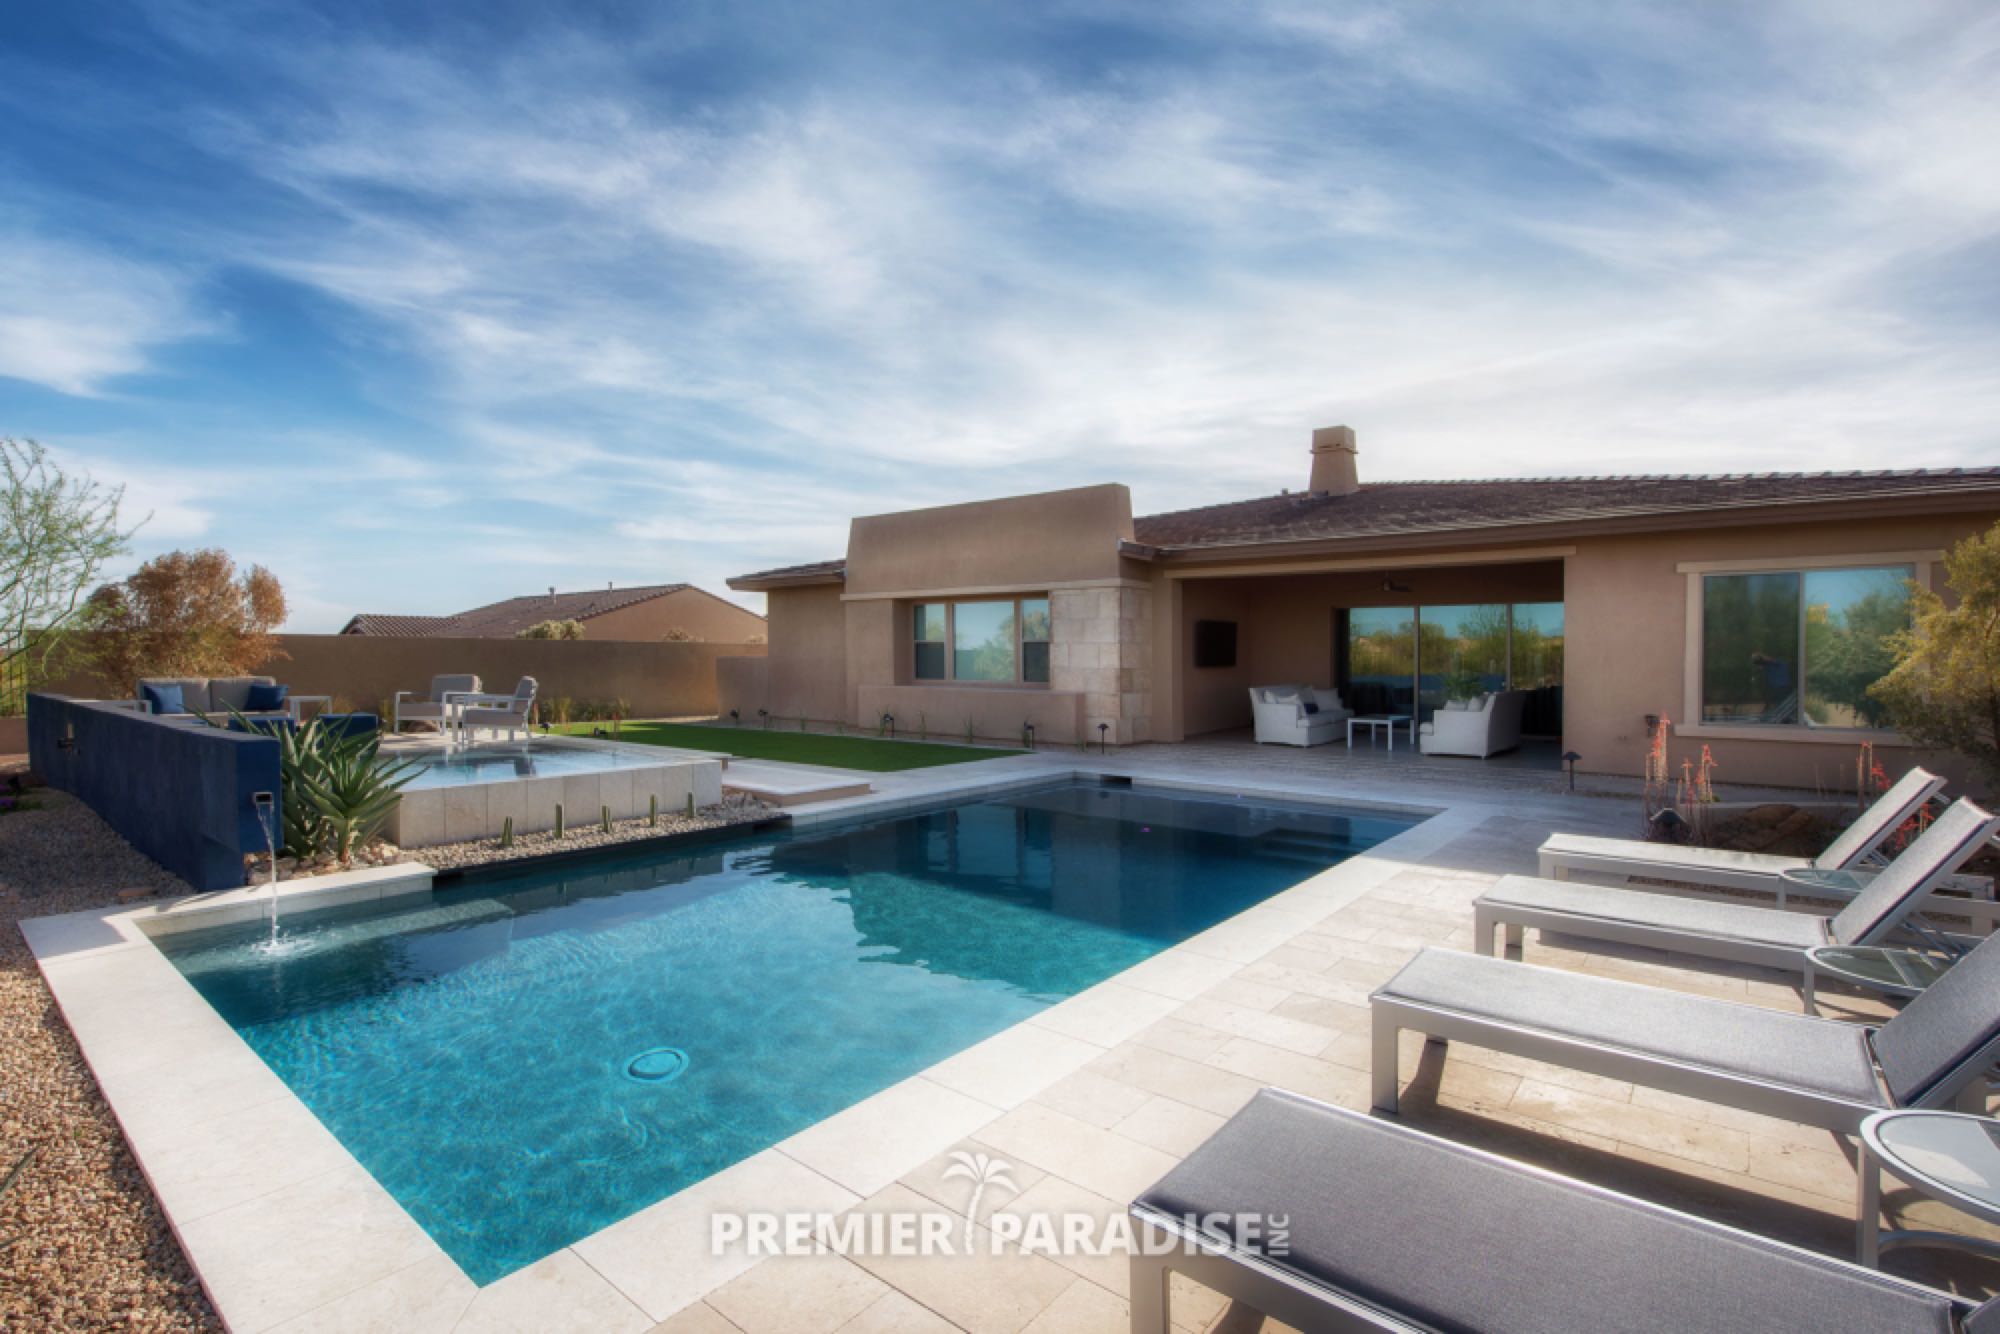 vanishing edge spa bocce court design custom pool builder arizona premier paradise inc 11 watermarked